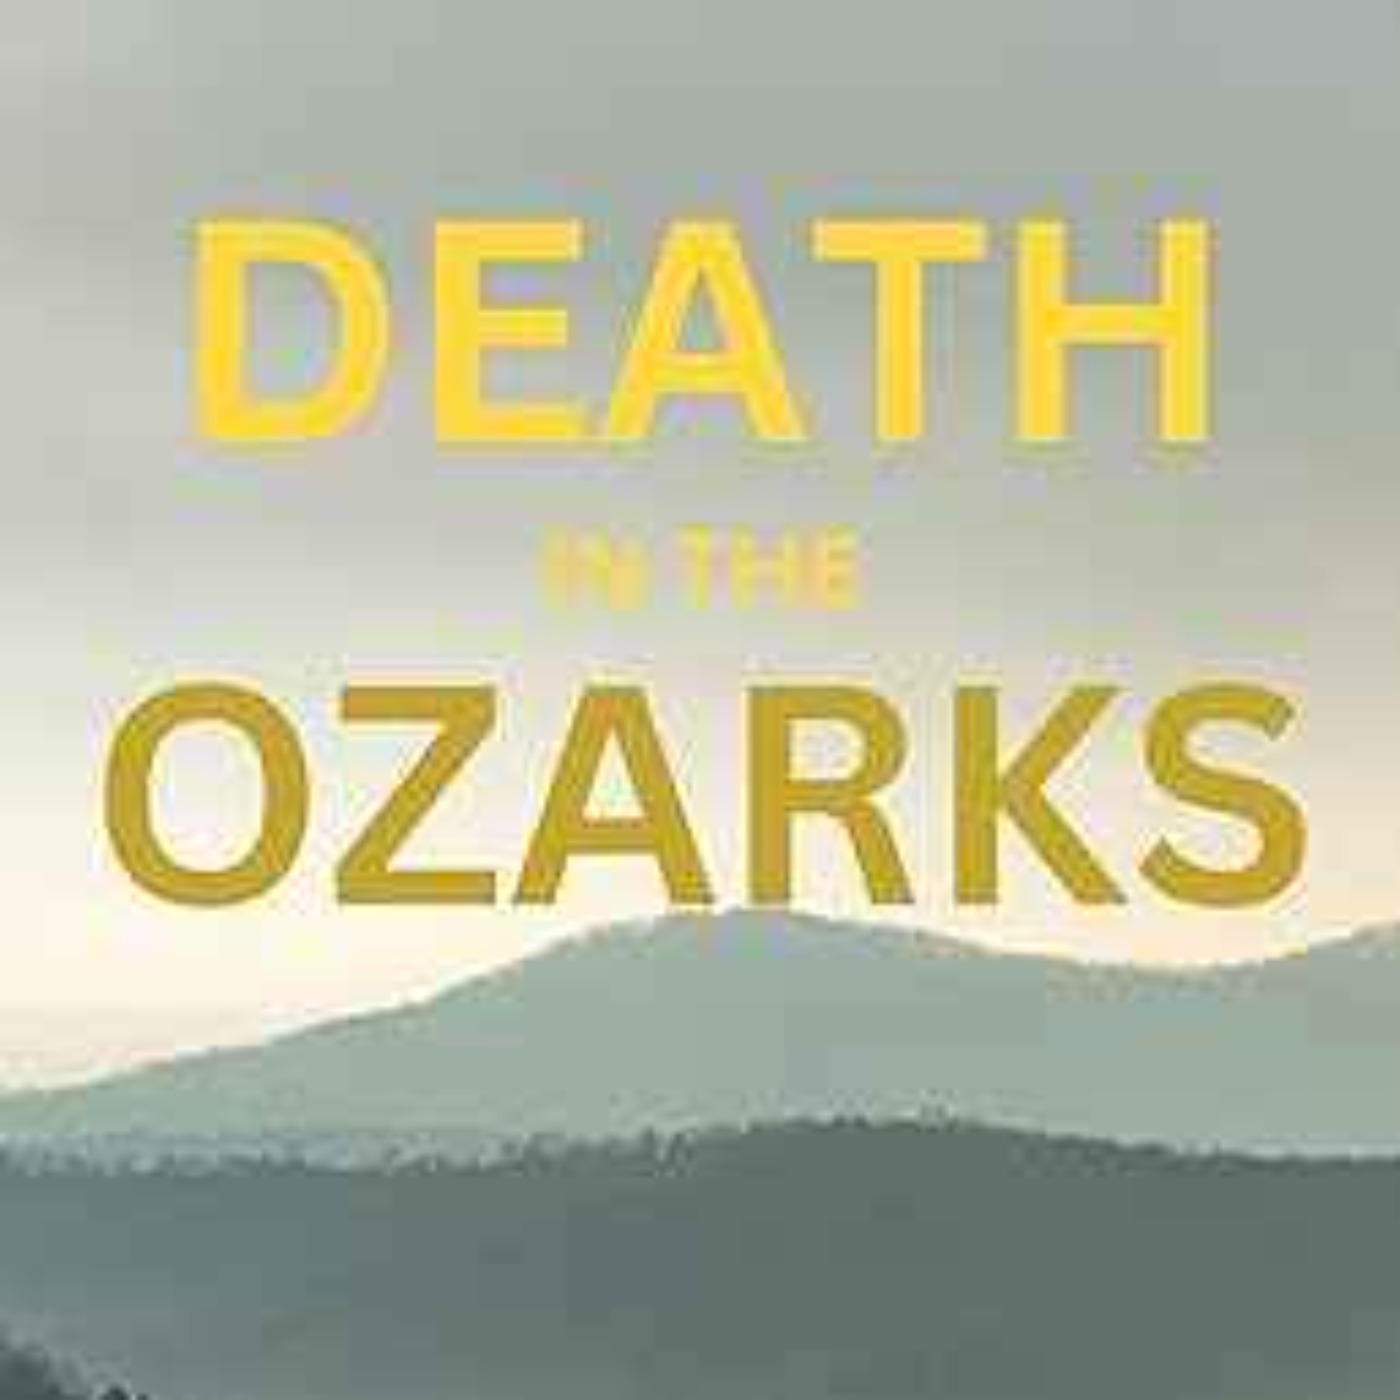 Erik S. Meyers - Death in the Ozarks